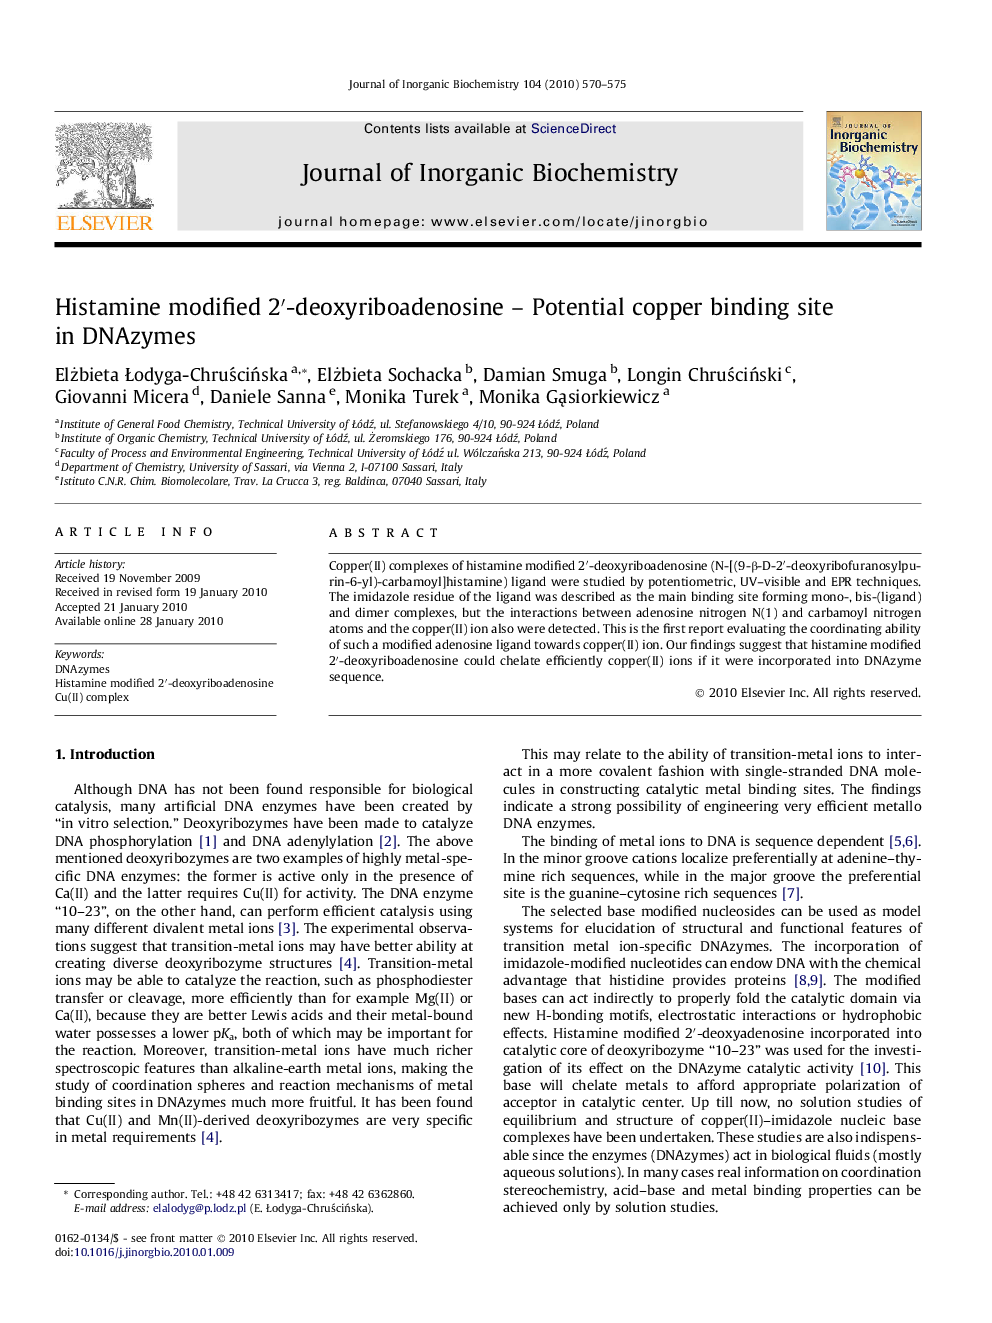 Histamine modified 2â²-deoxyriboadenosine - Potential copper binding site in DNAzymes